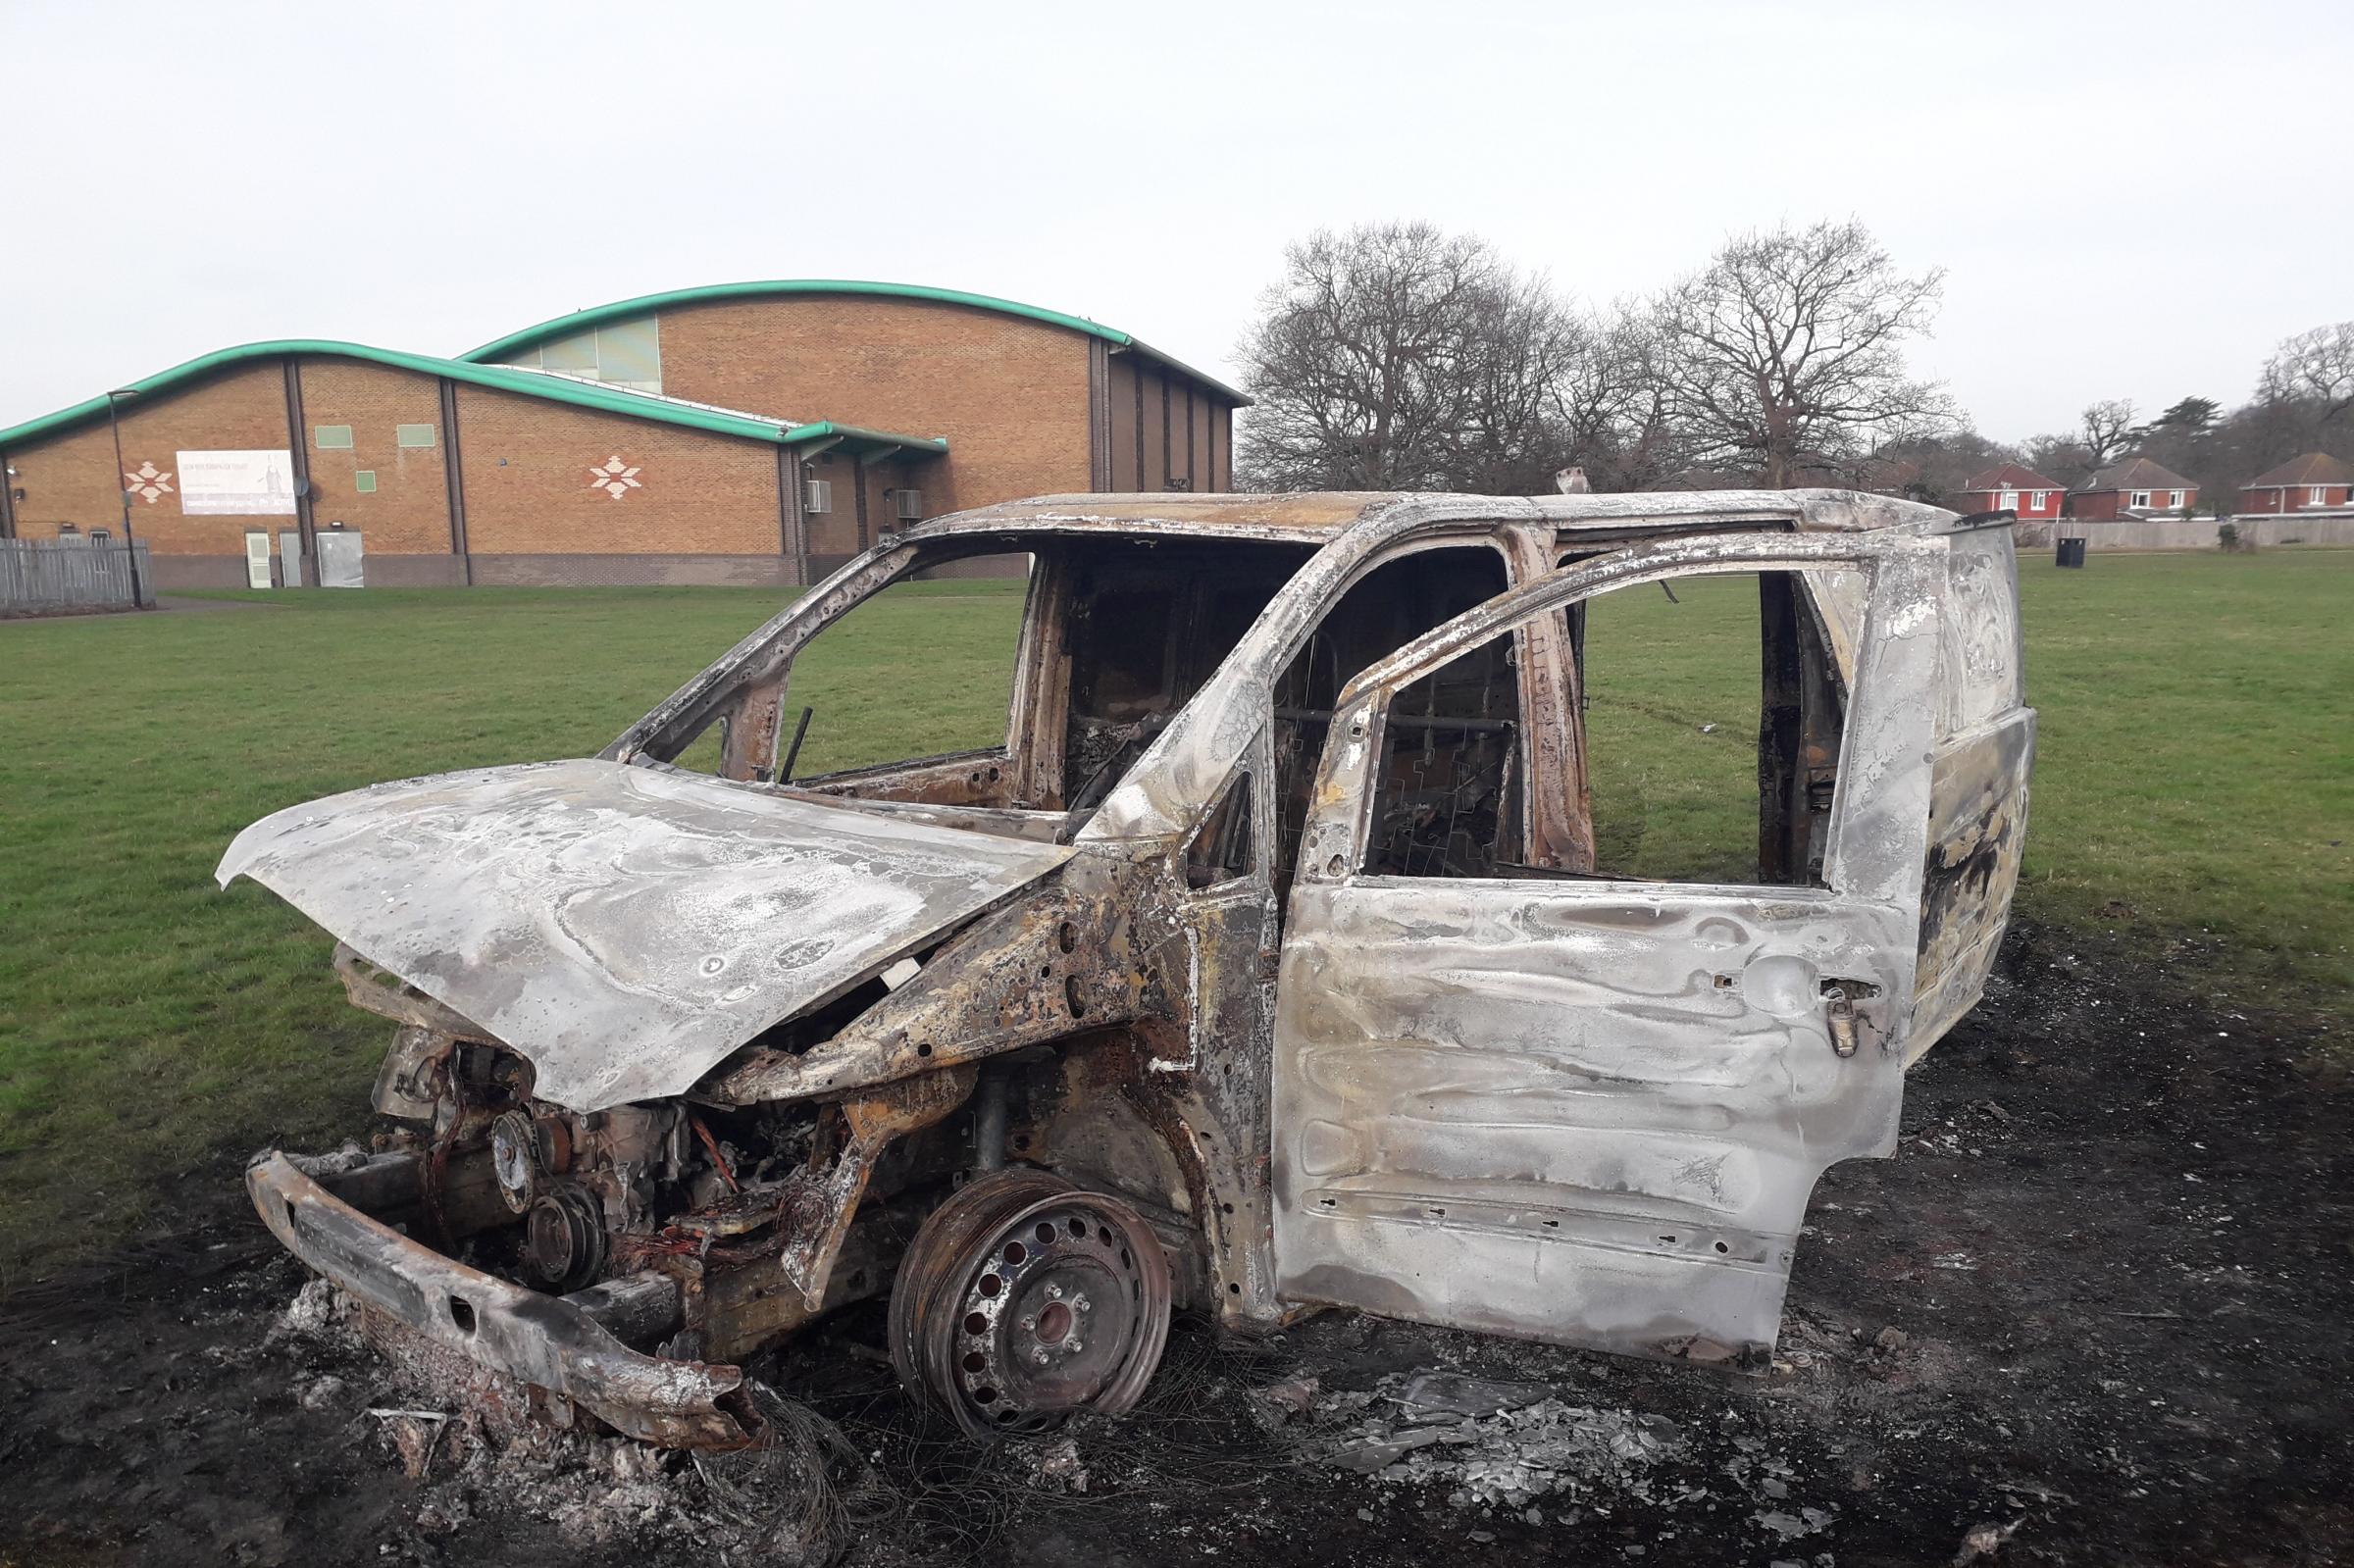 Burned-out van dumped behind Southampton leisure centre